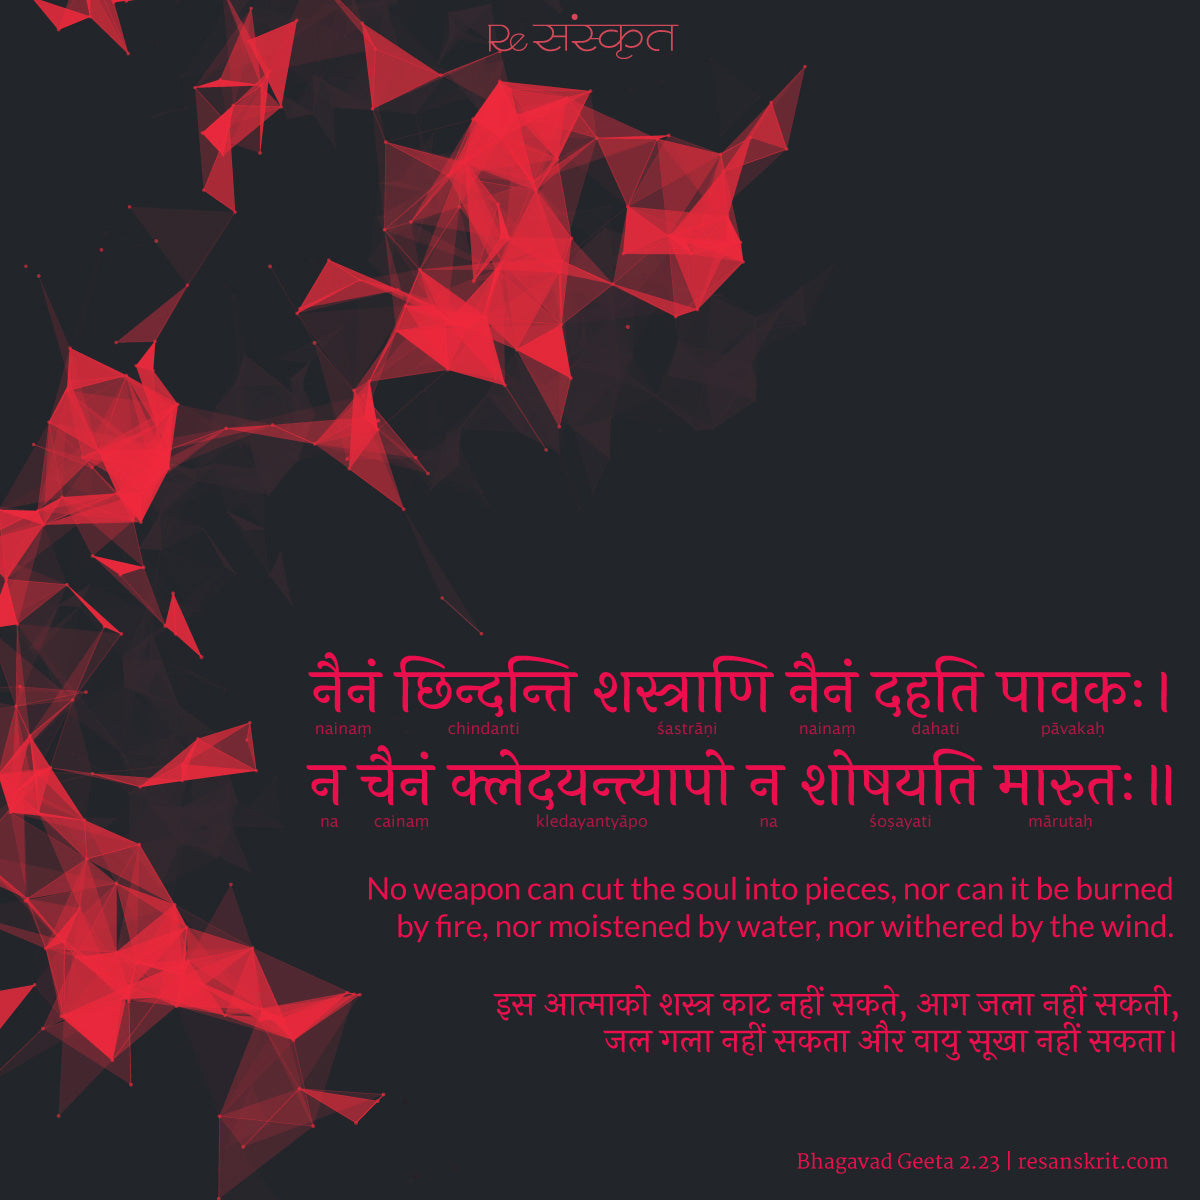 Bhagavad Gita quote 2.23